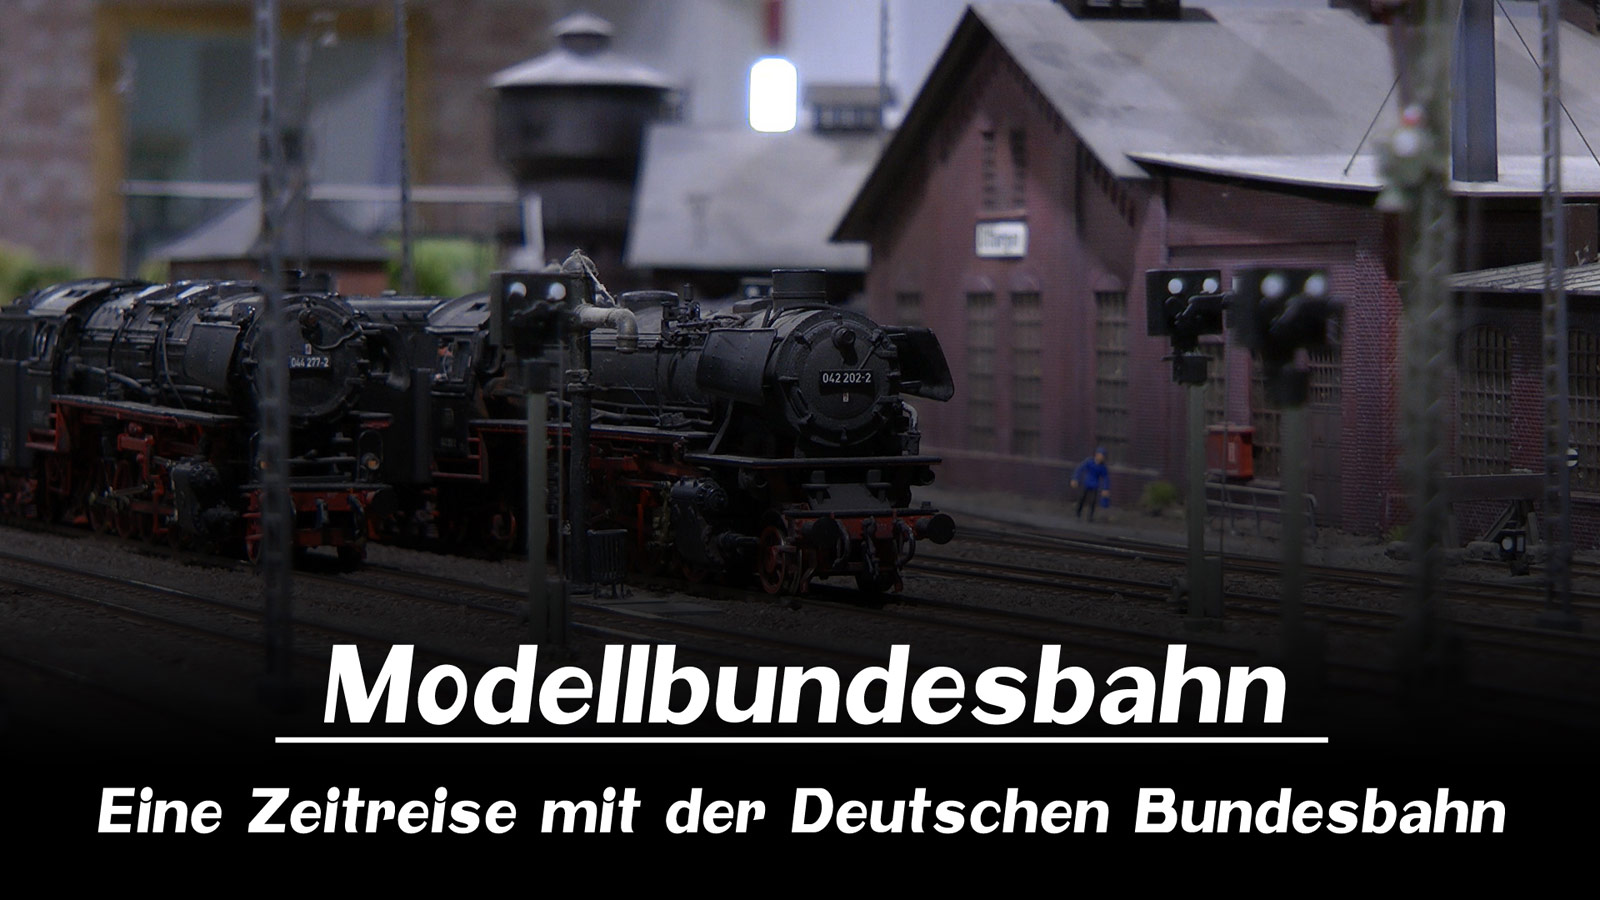 Prime Video: Modellbundesbahn in Brakel